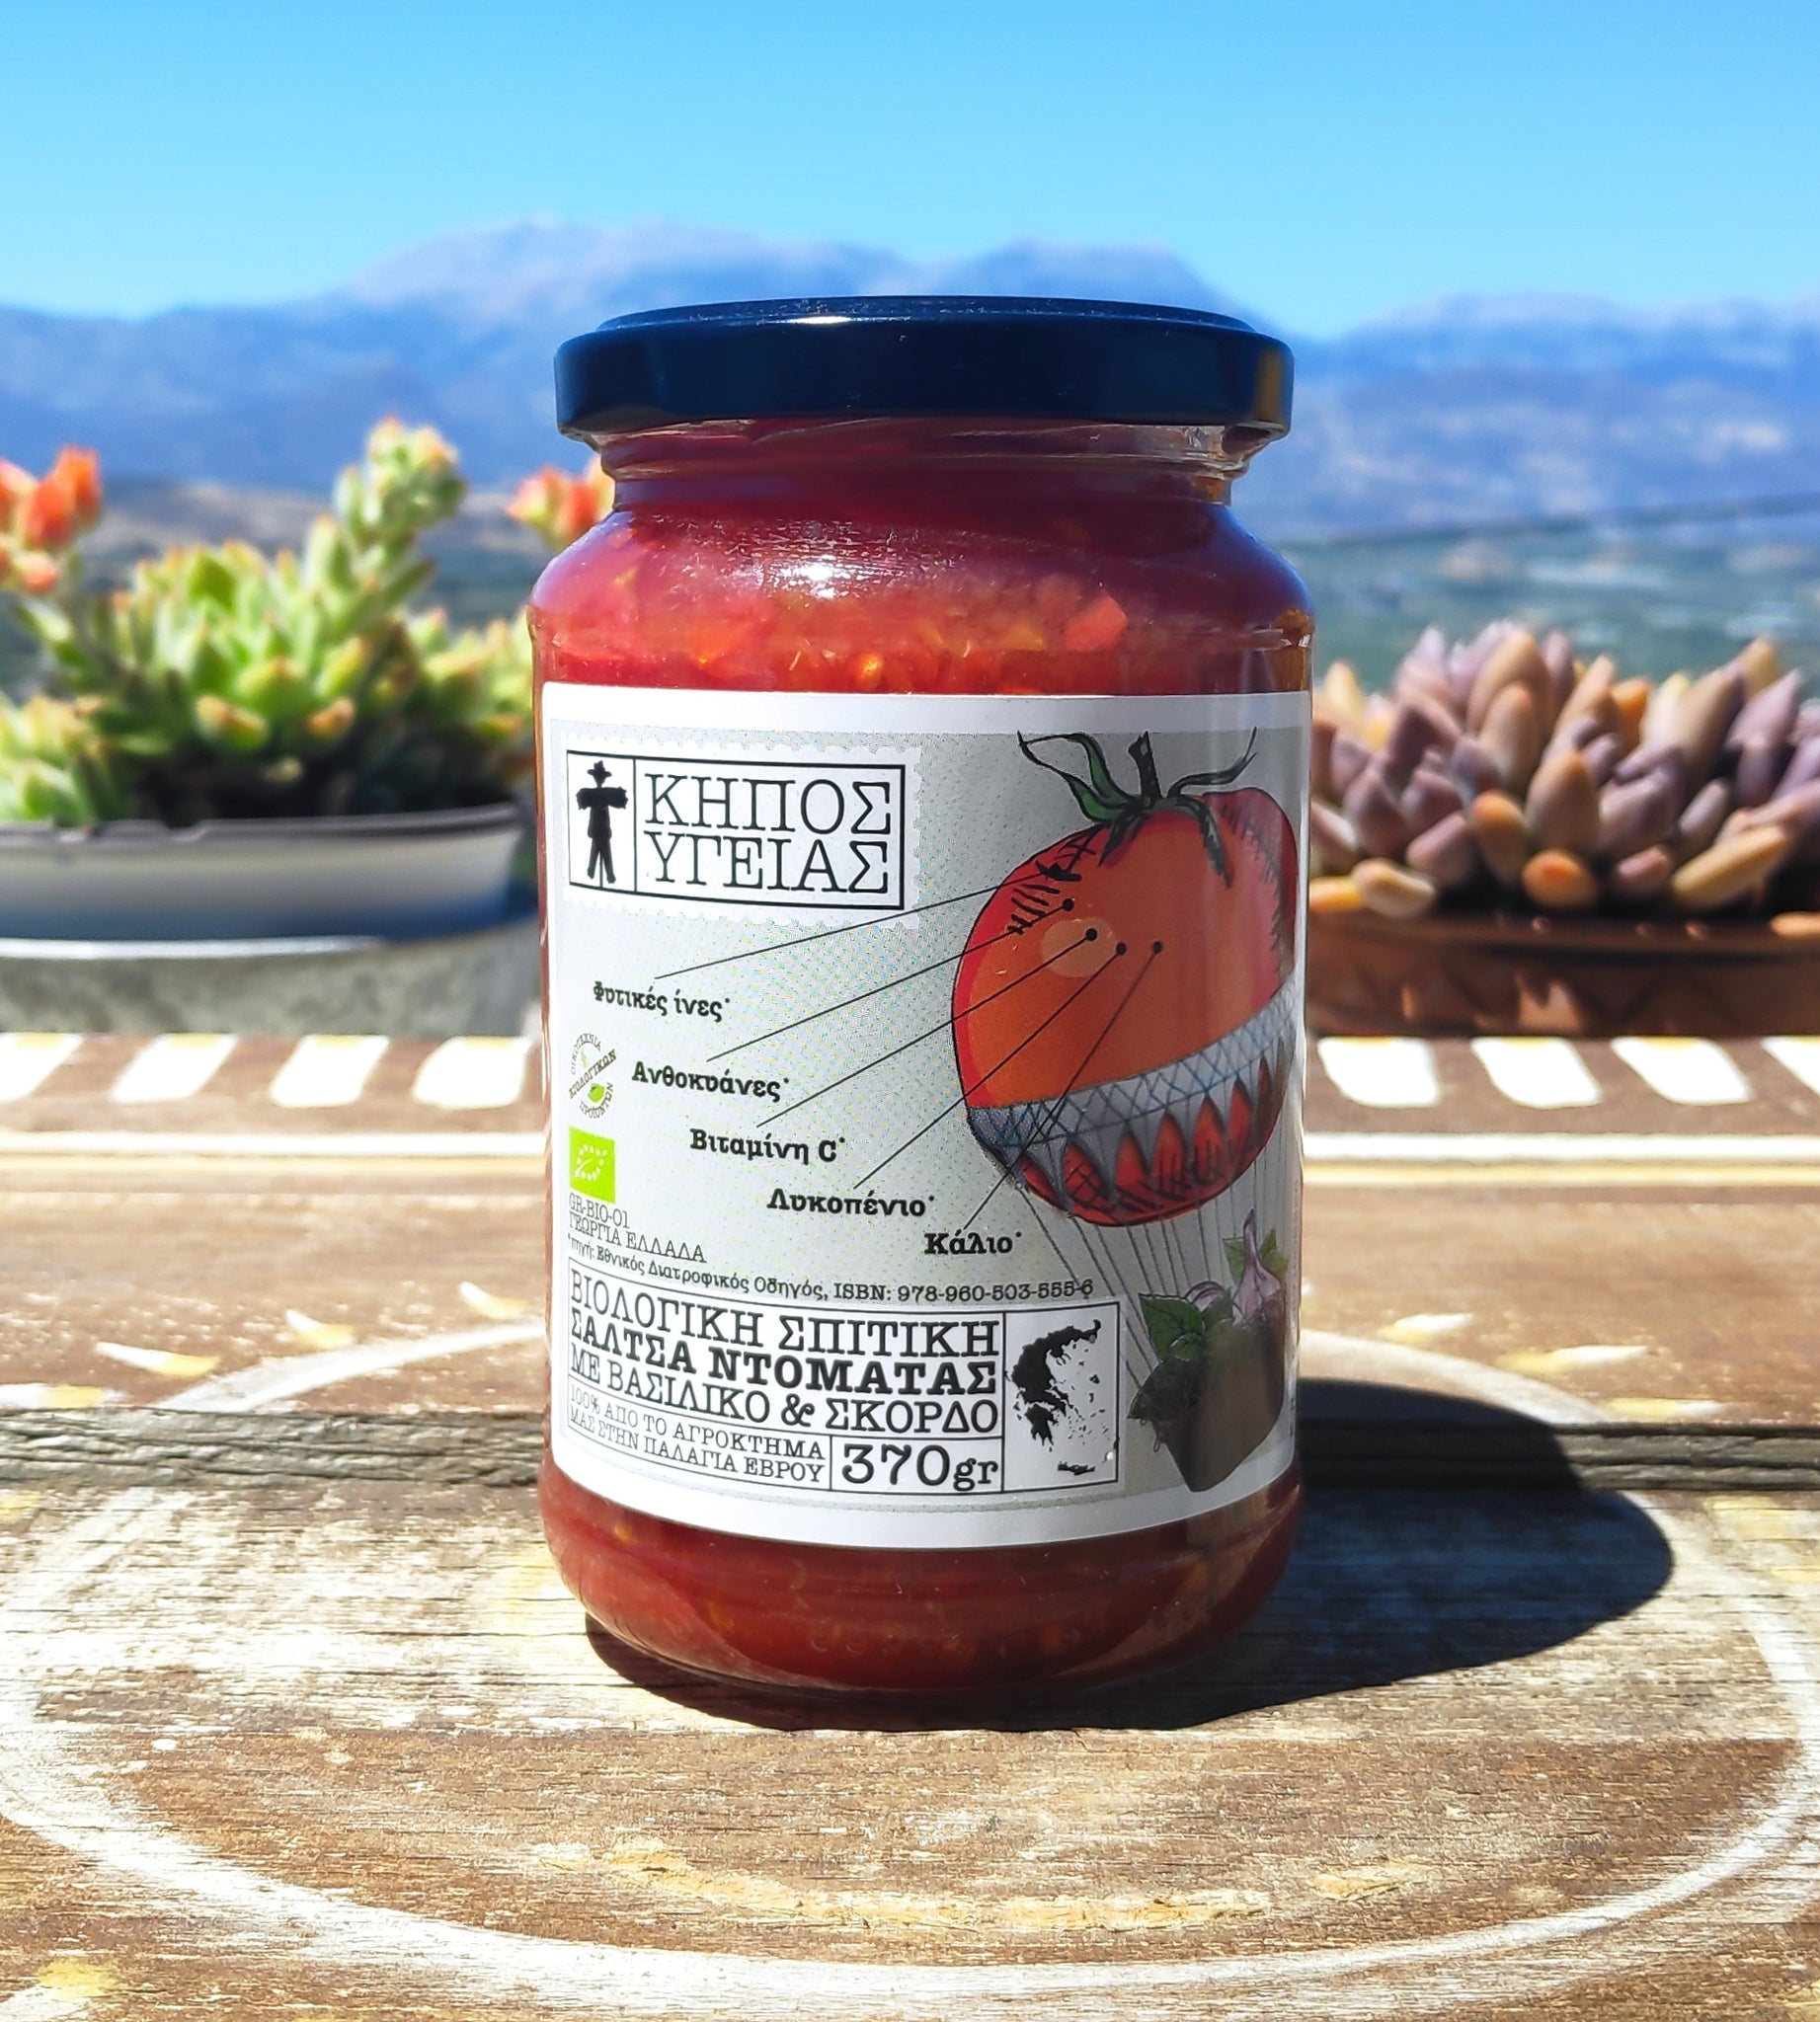 Tomato Sauce With Basil & Garlic | Organic